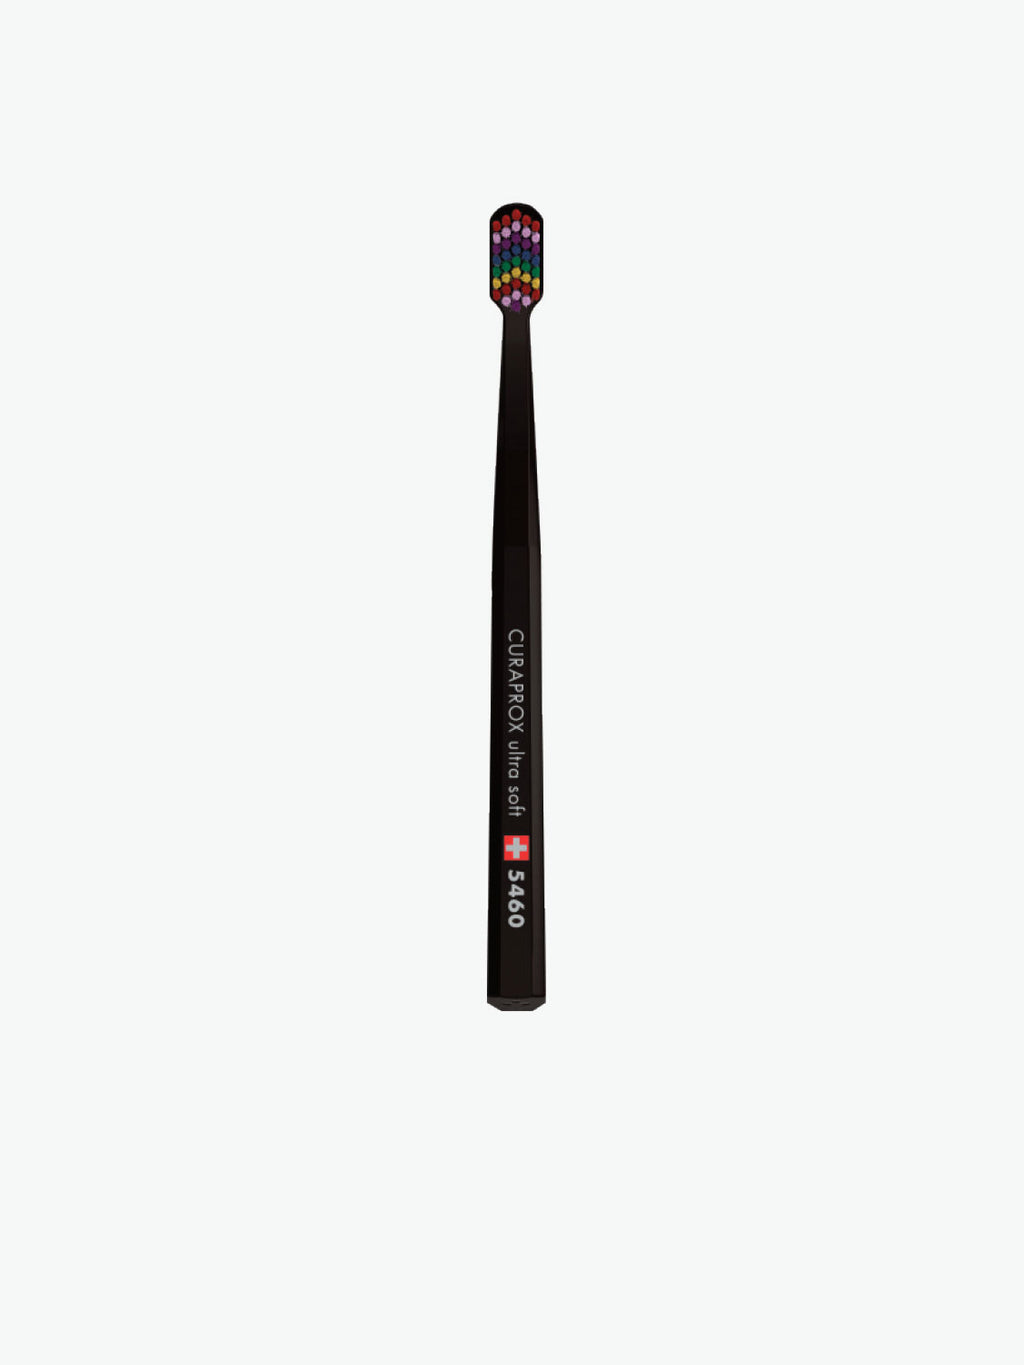 Curaprox Ultra Soft Duo Winter Pink Edition - Toothbrush Set CS 5460, ultra  soft